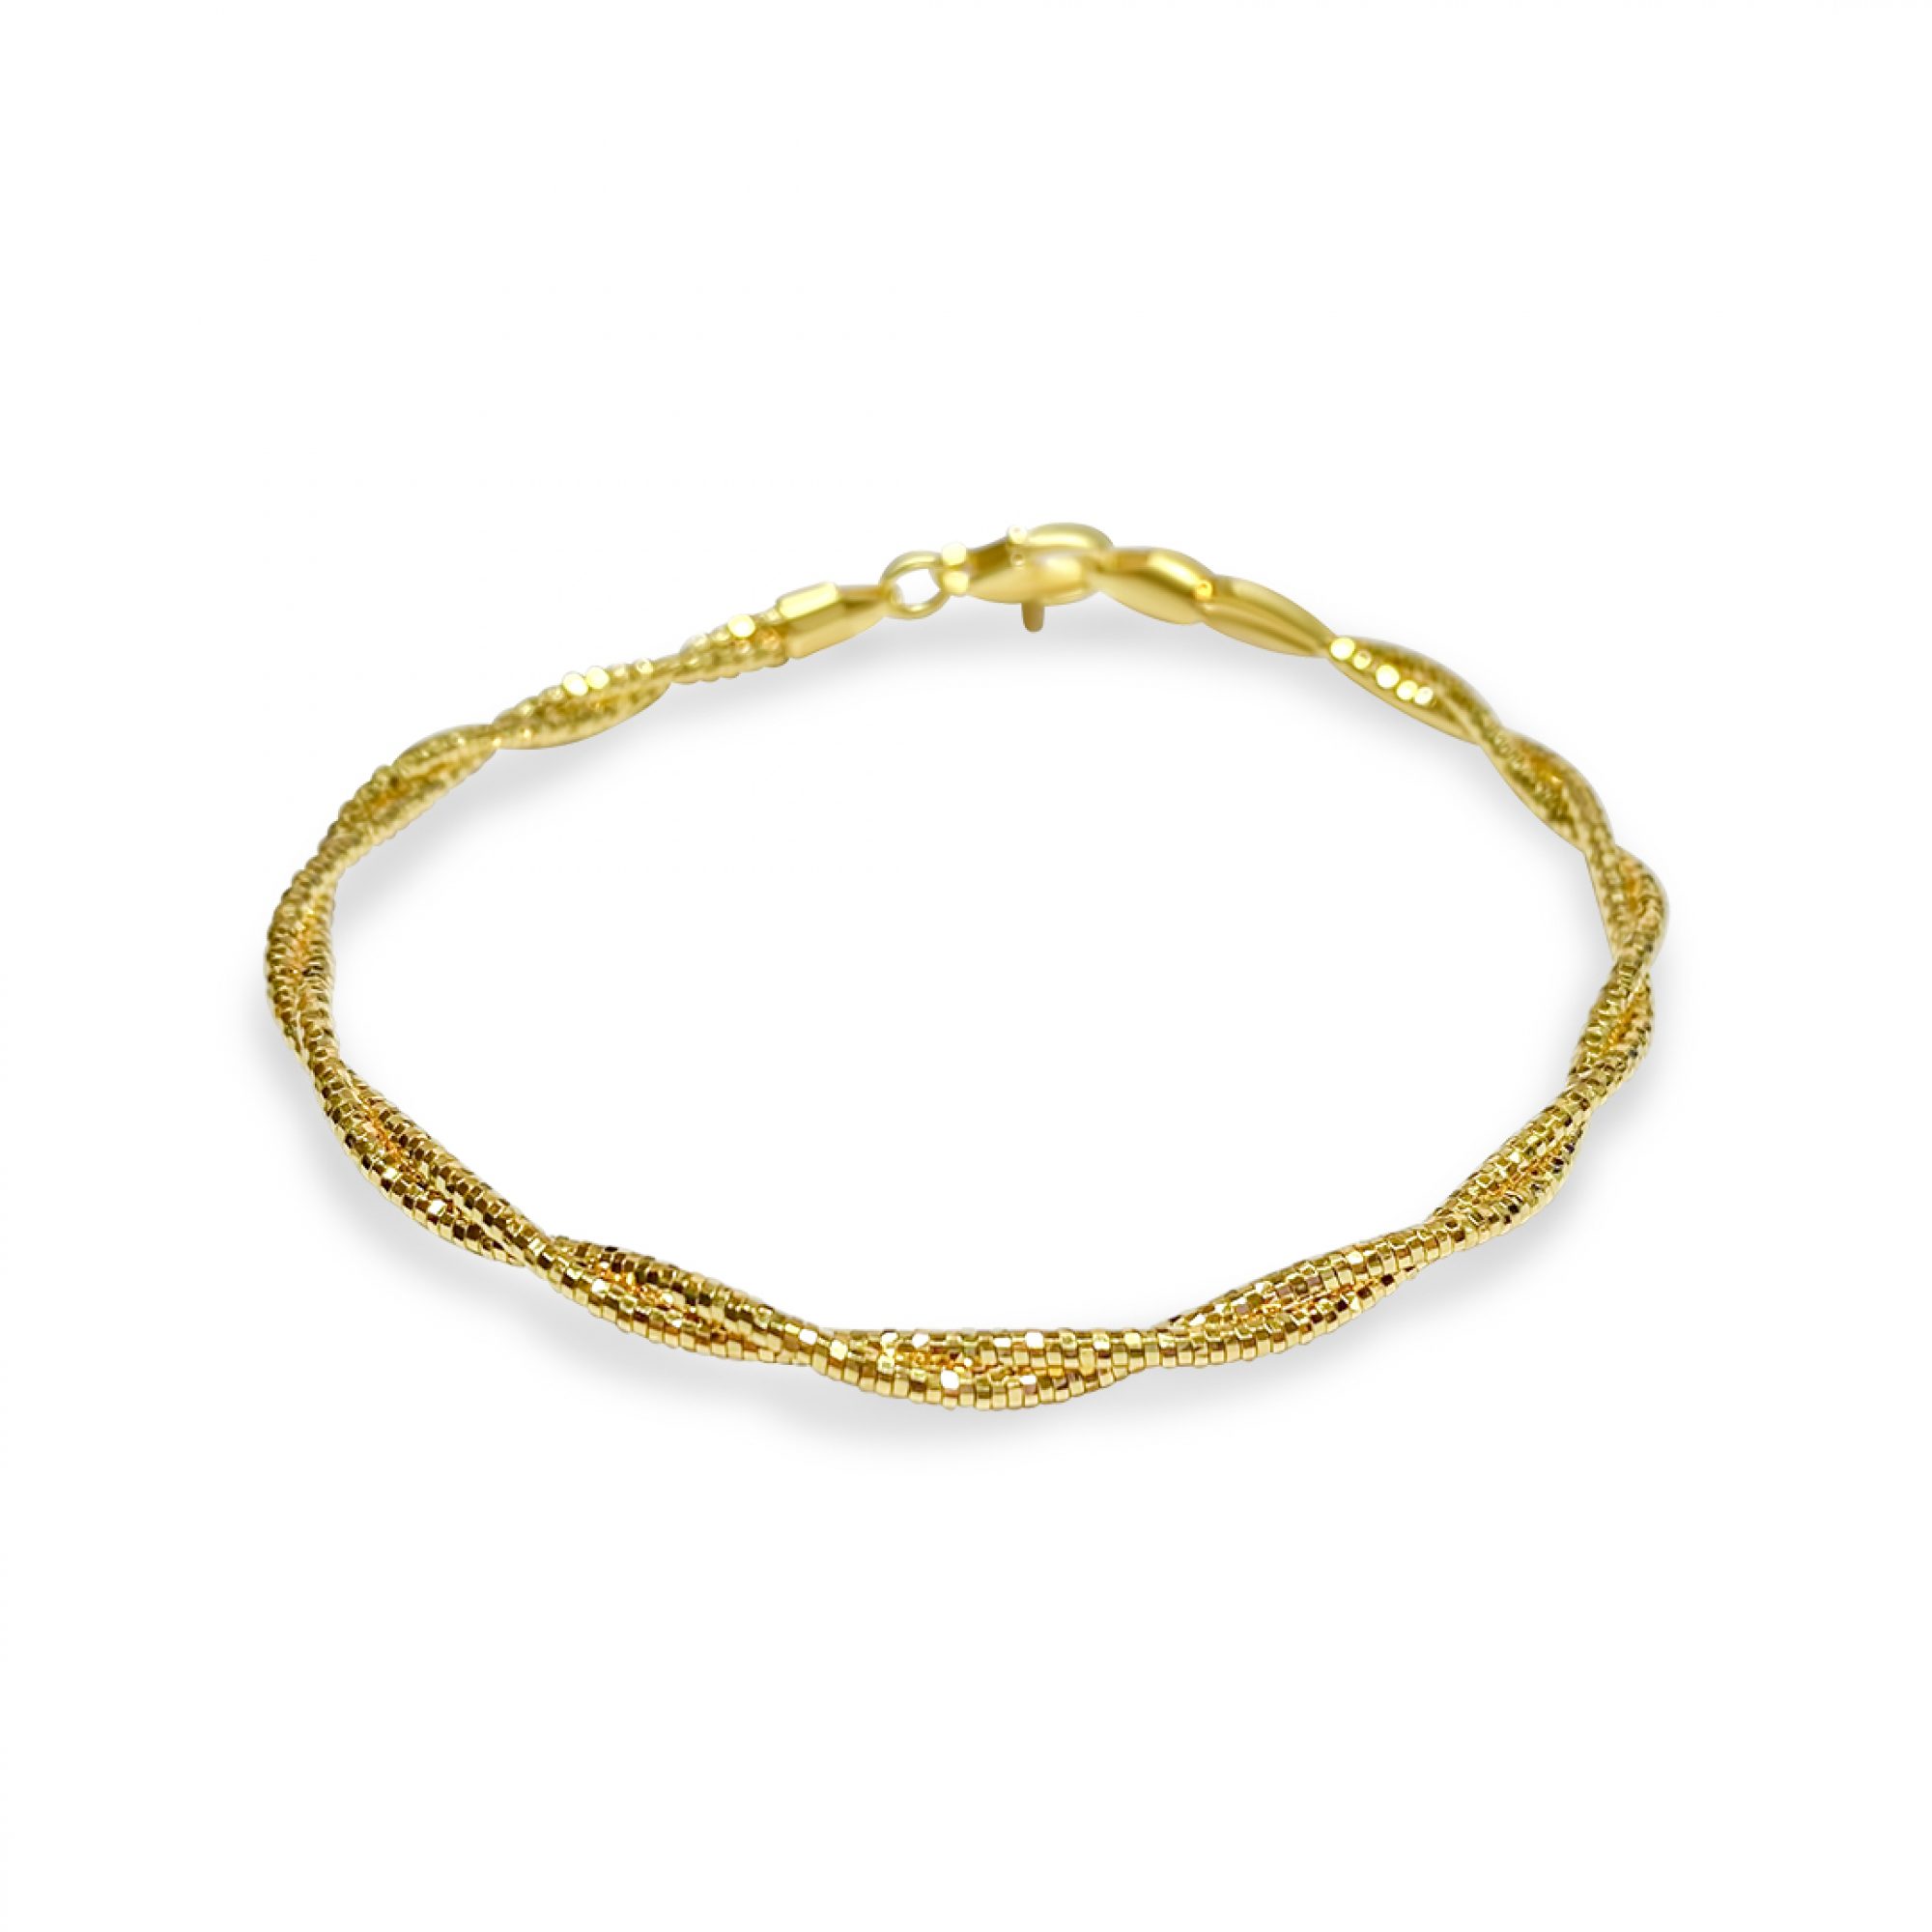 Gold plated bracelet